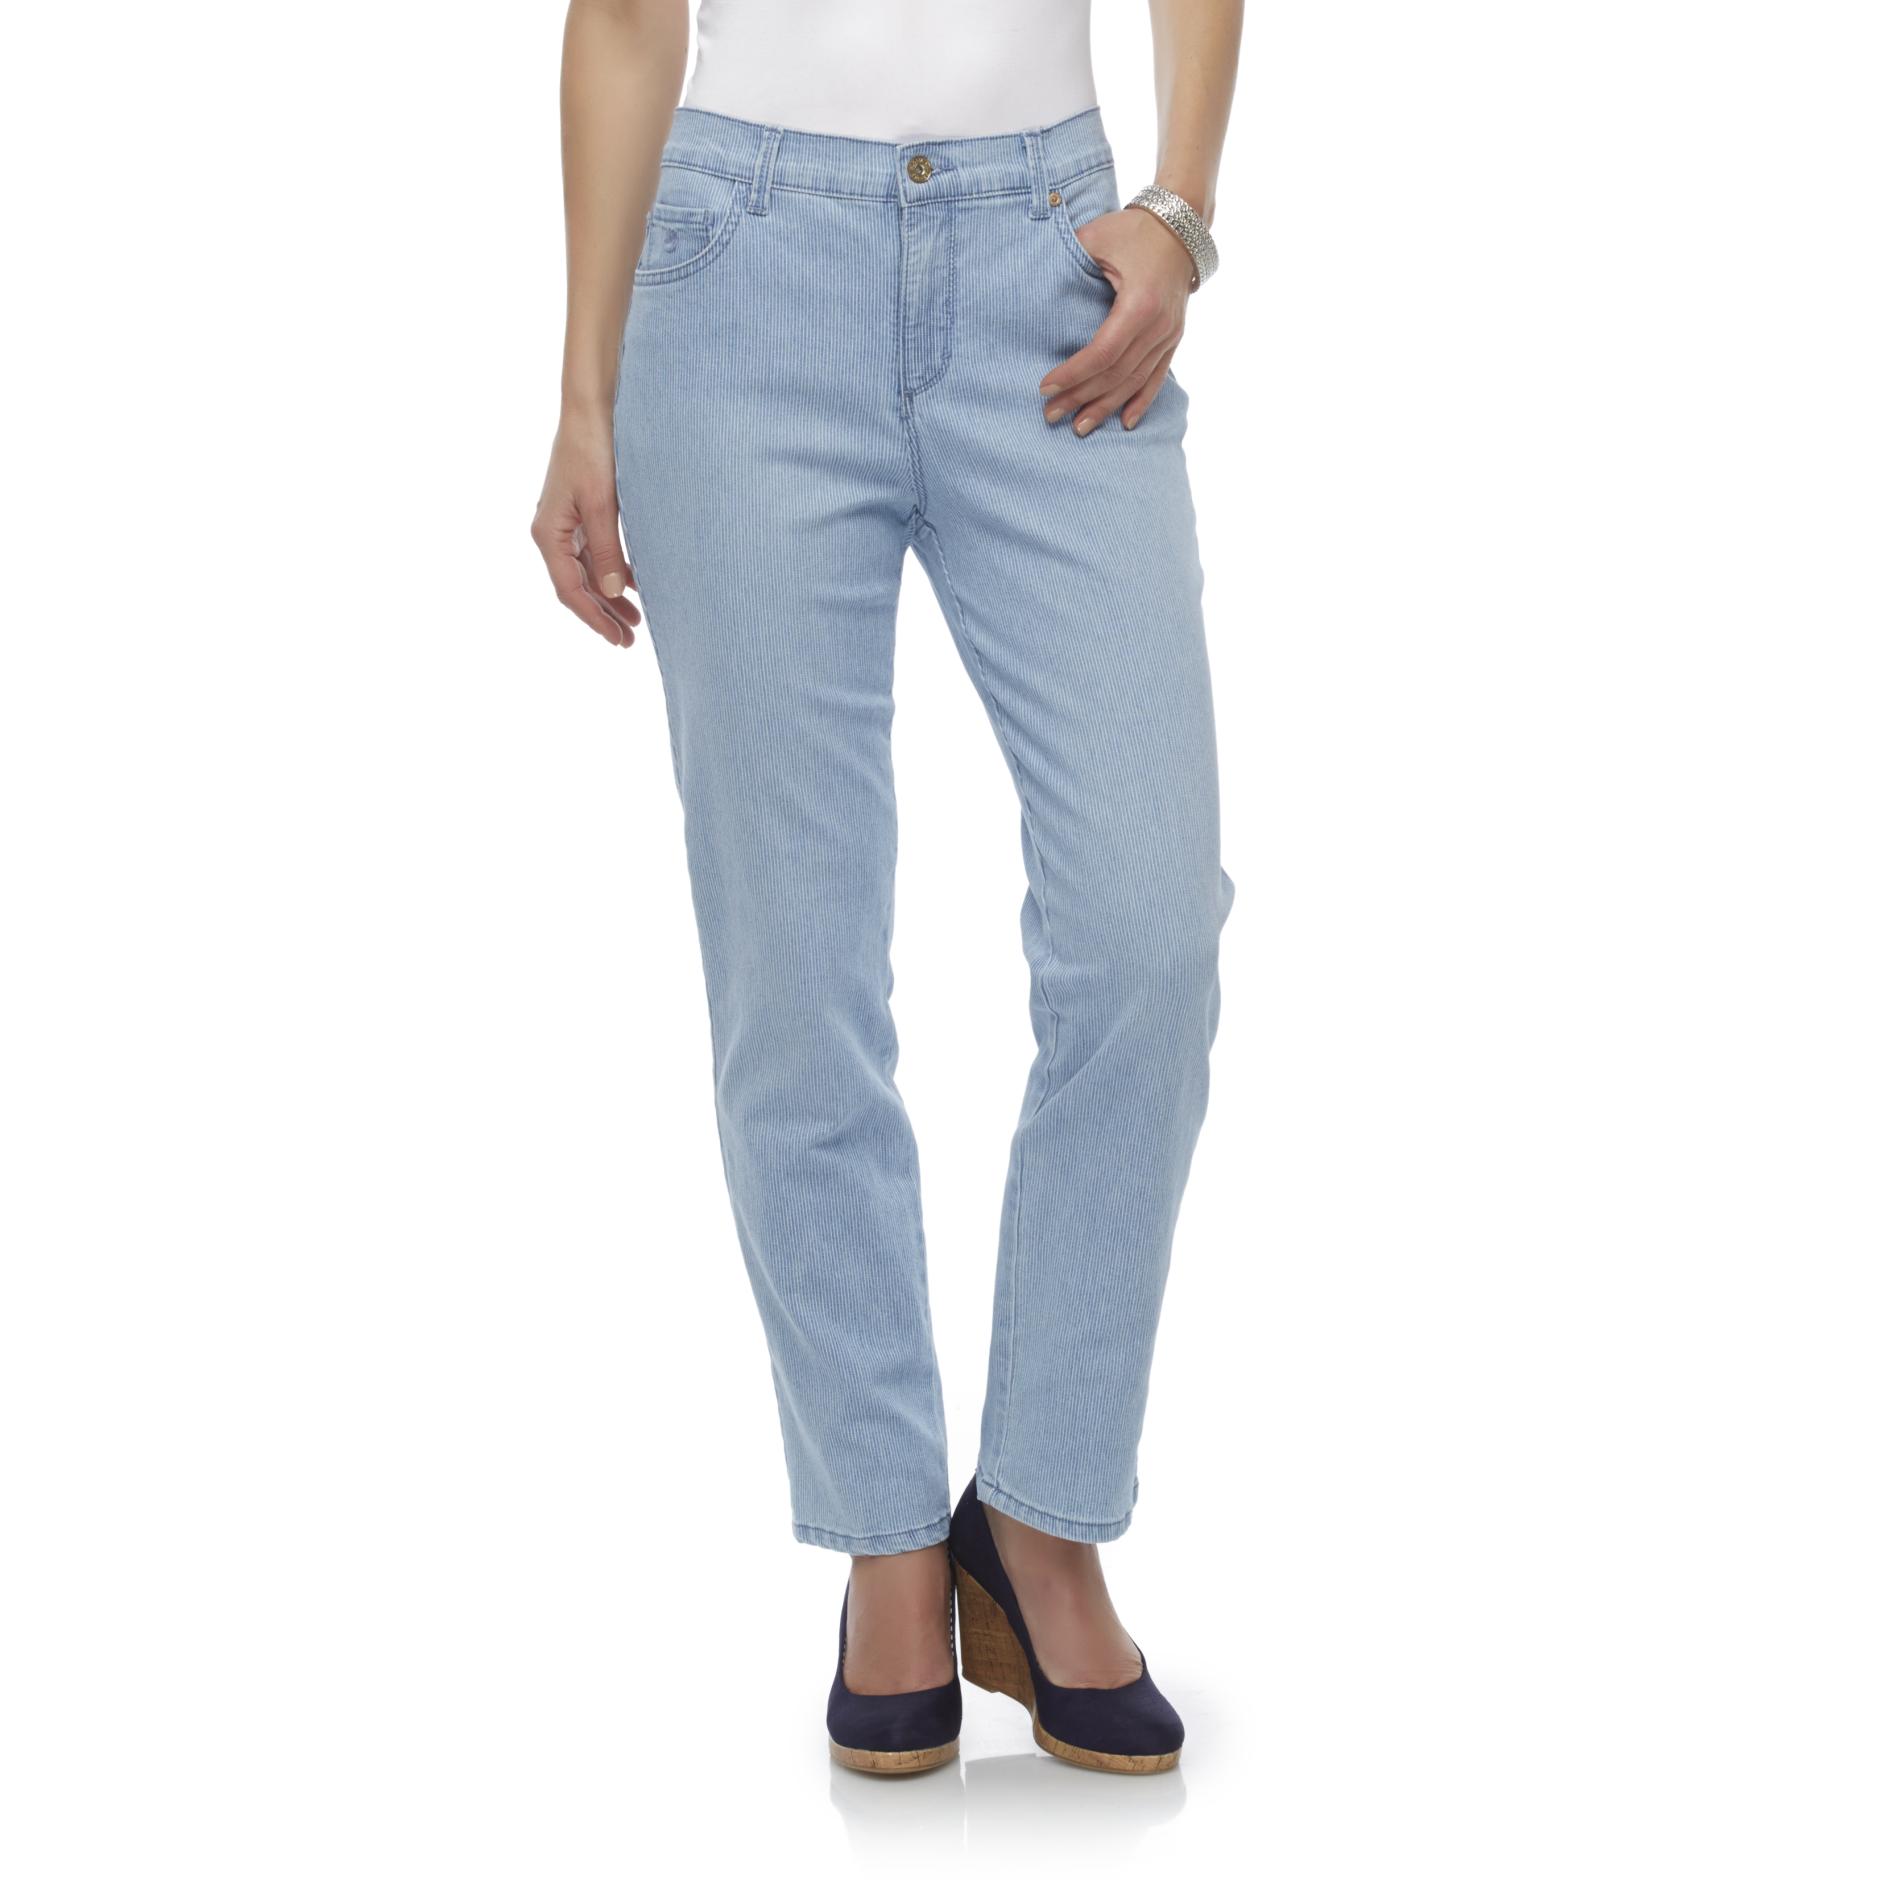 Gloria Vanderbilt Petite's Stretch Fit Amanda Jeans